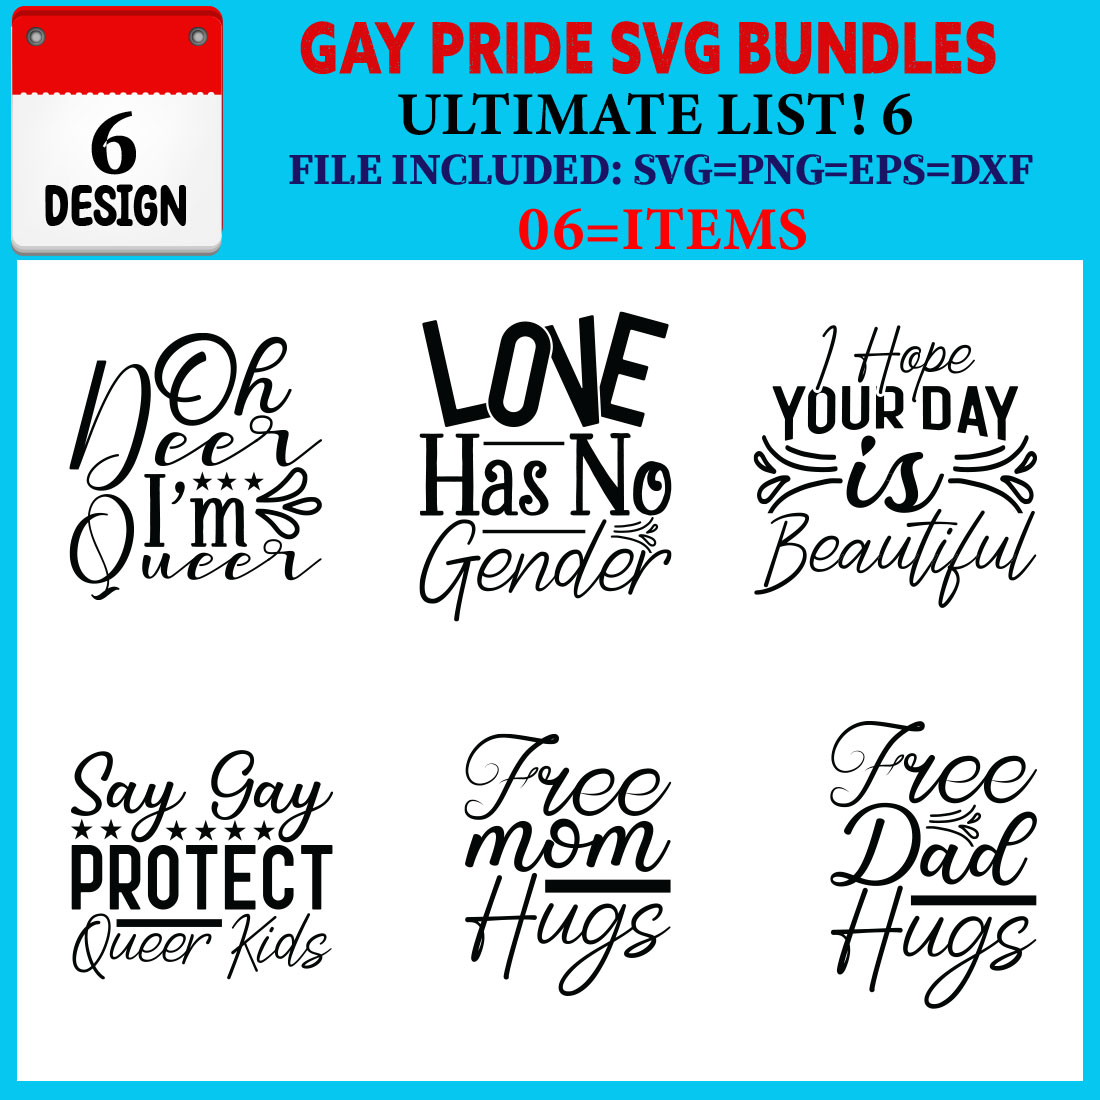 Gay Pride T-shirt Design Bundle Vol-02 cover image.